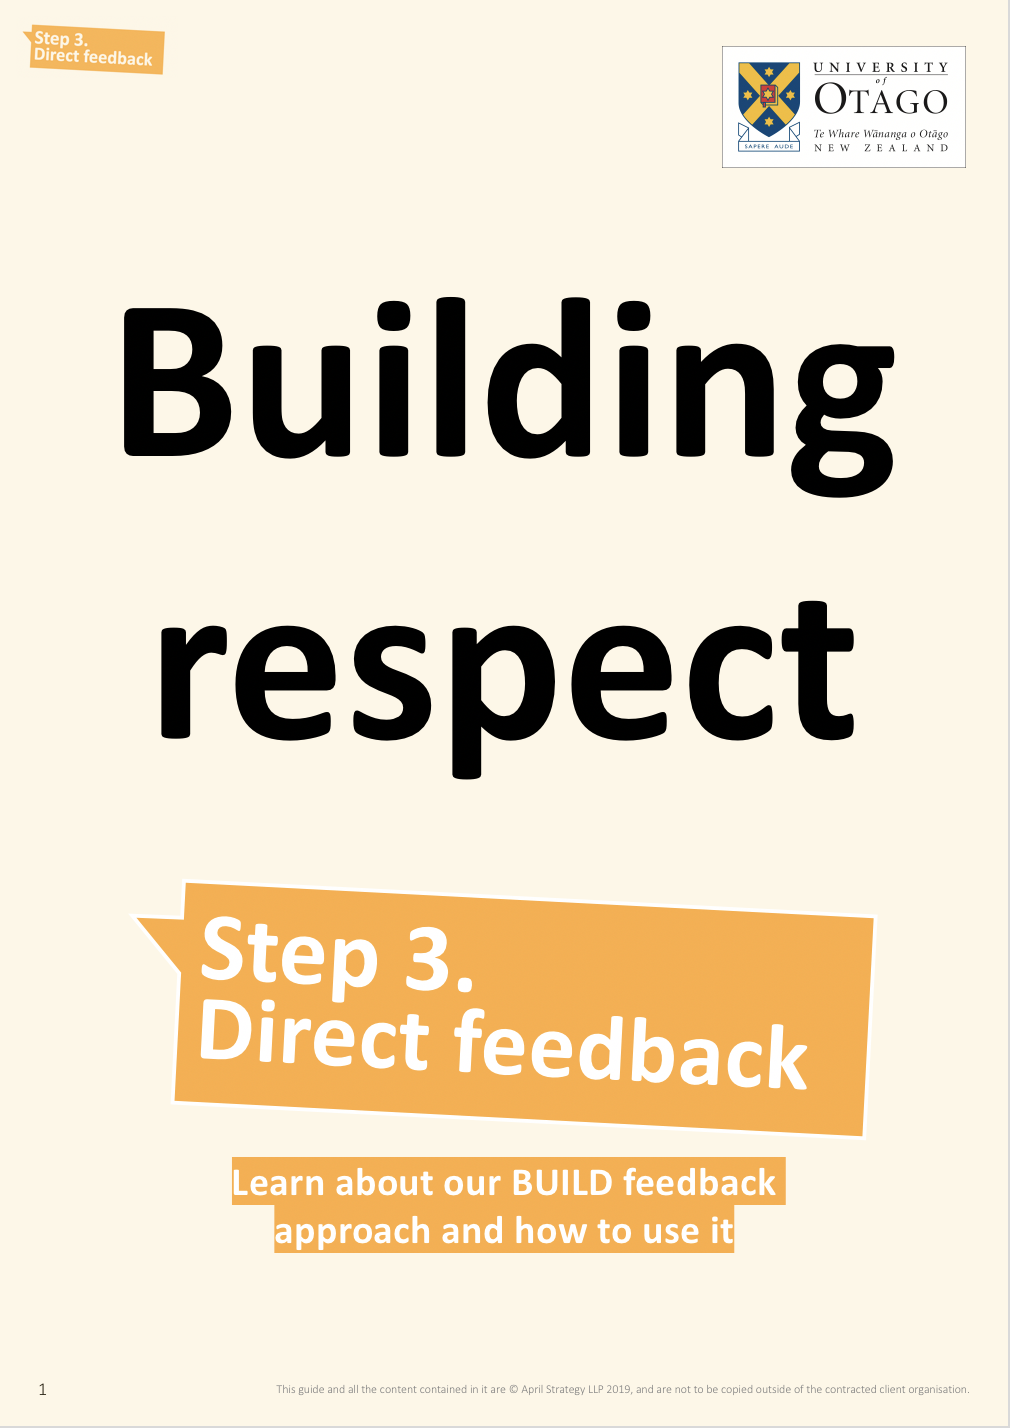 Direct feedback guide